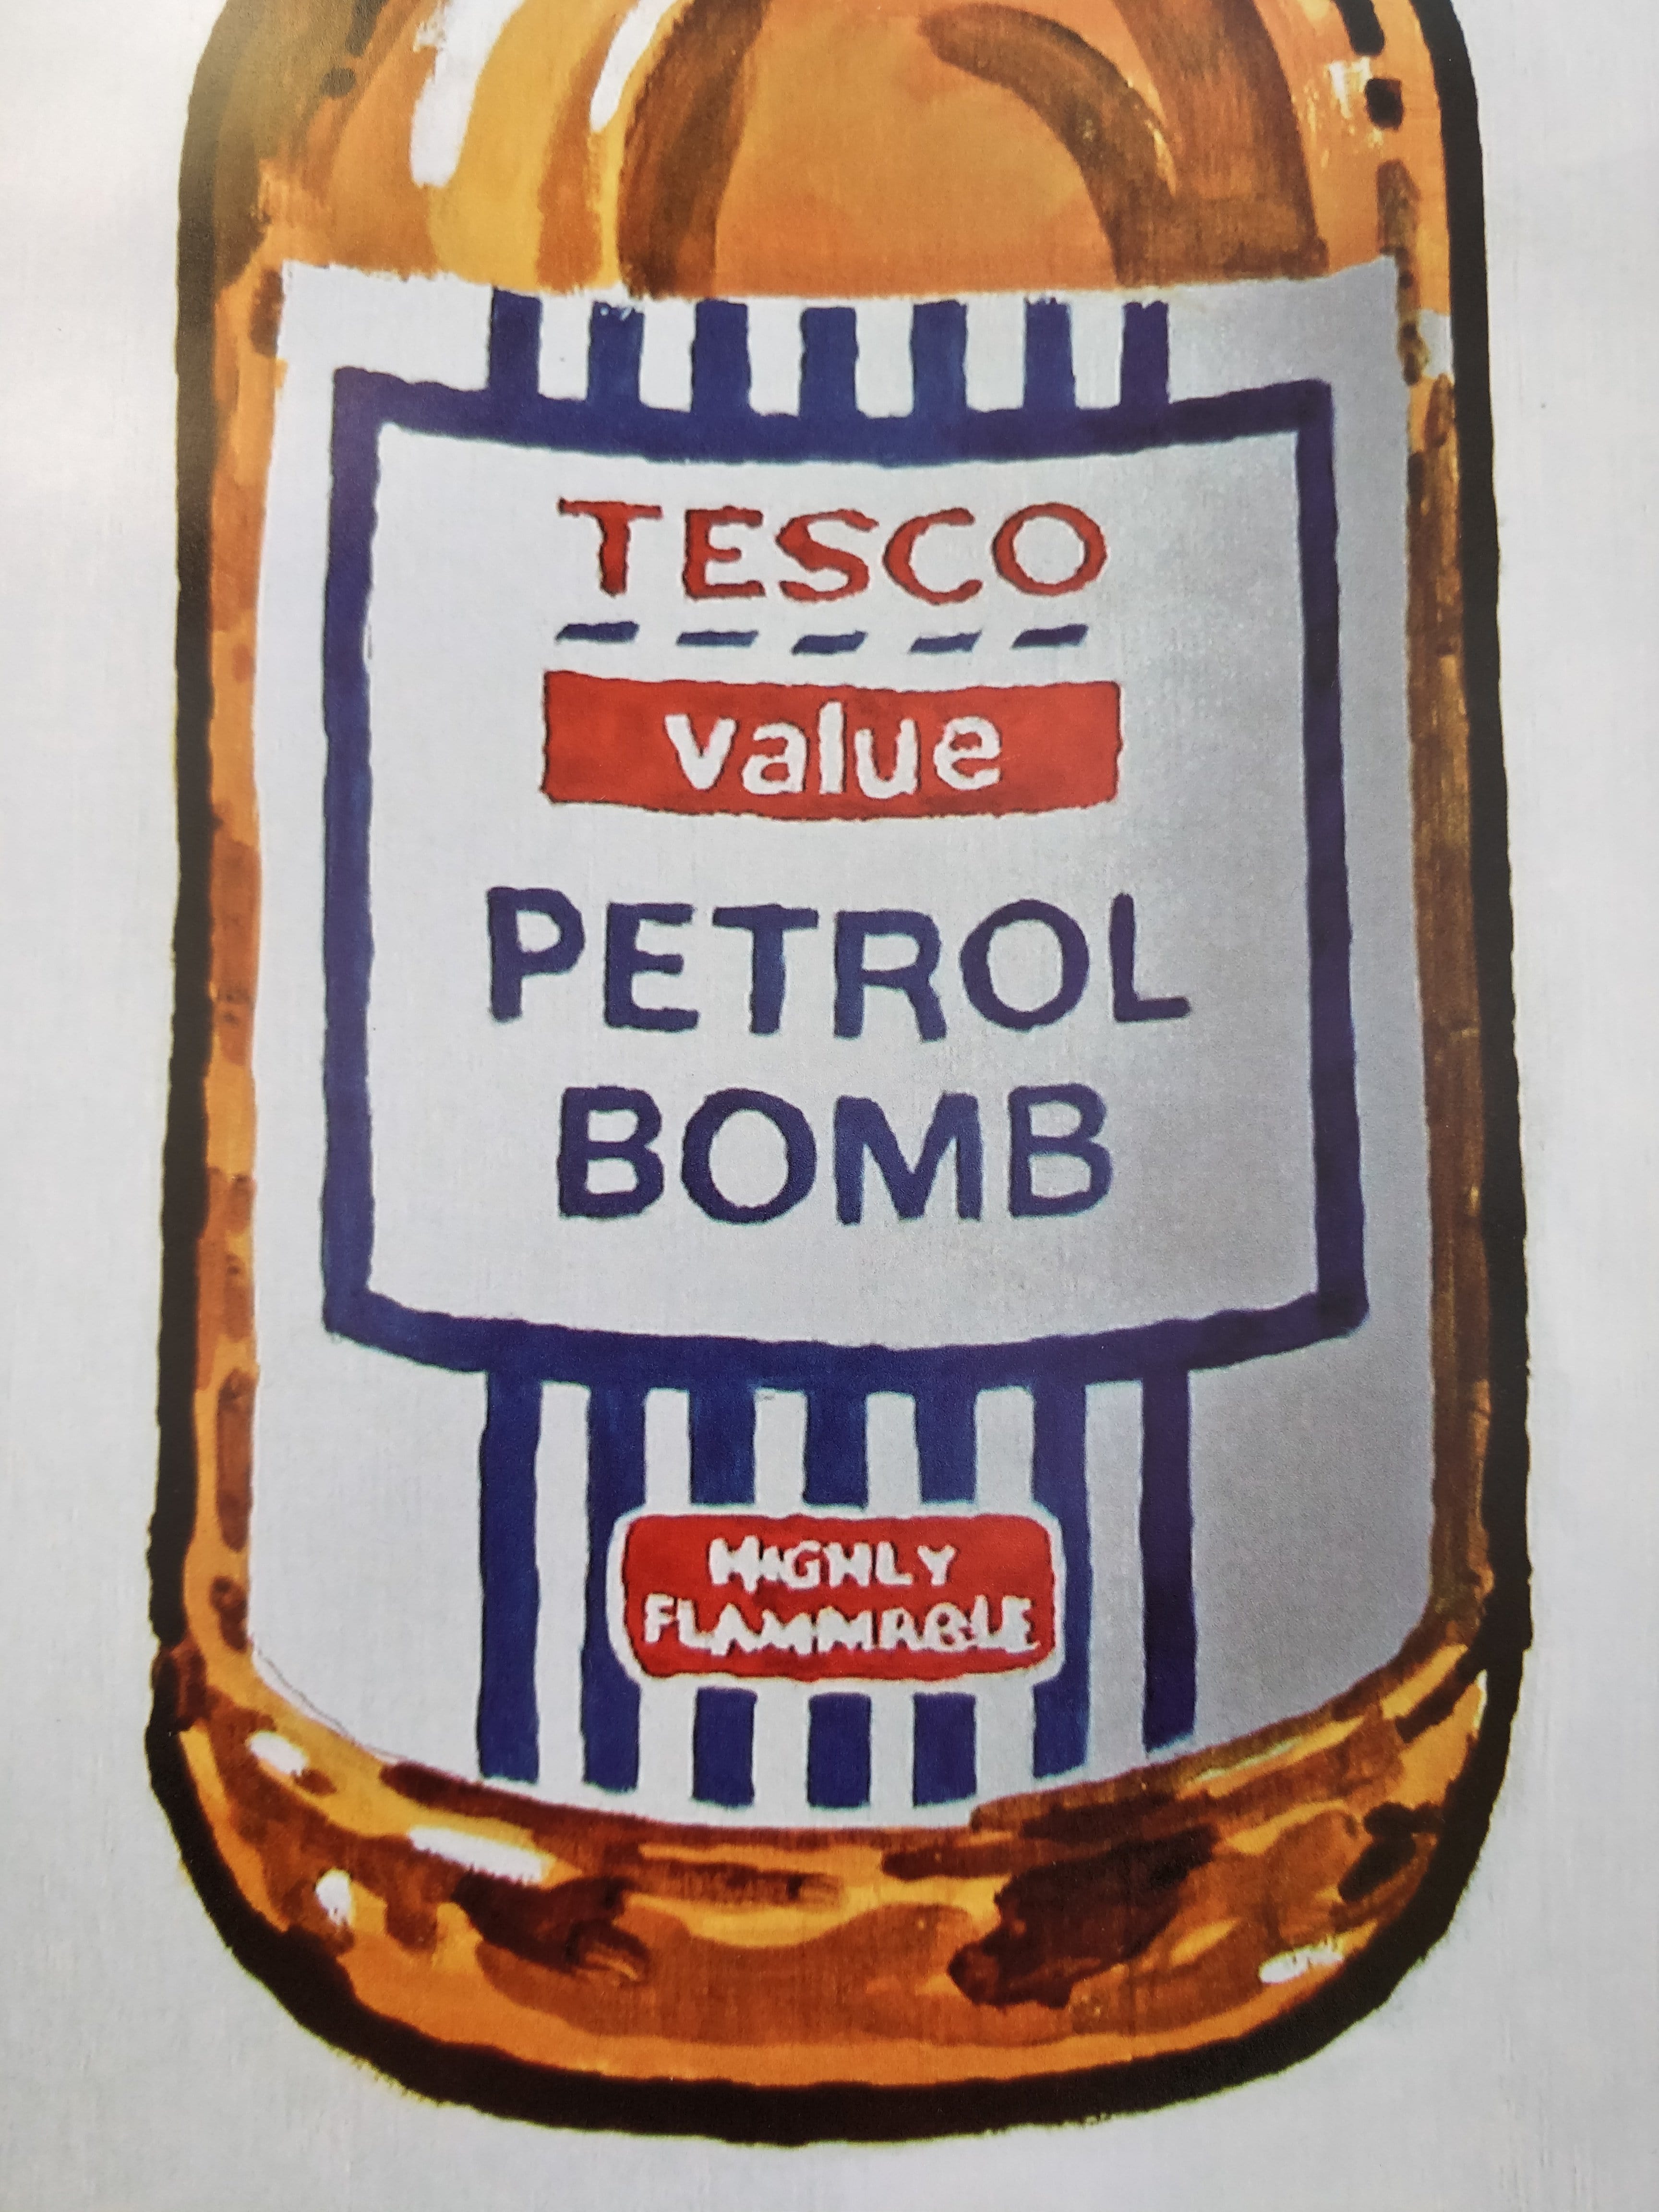 Tesco Value Petrol Bomb, 2011 Enlarged